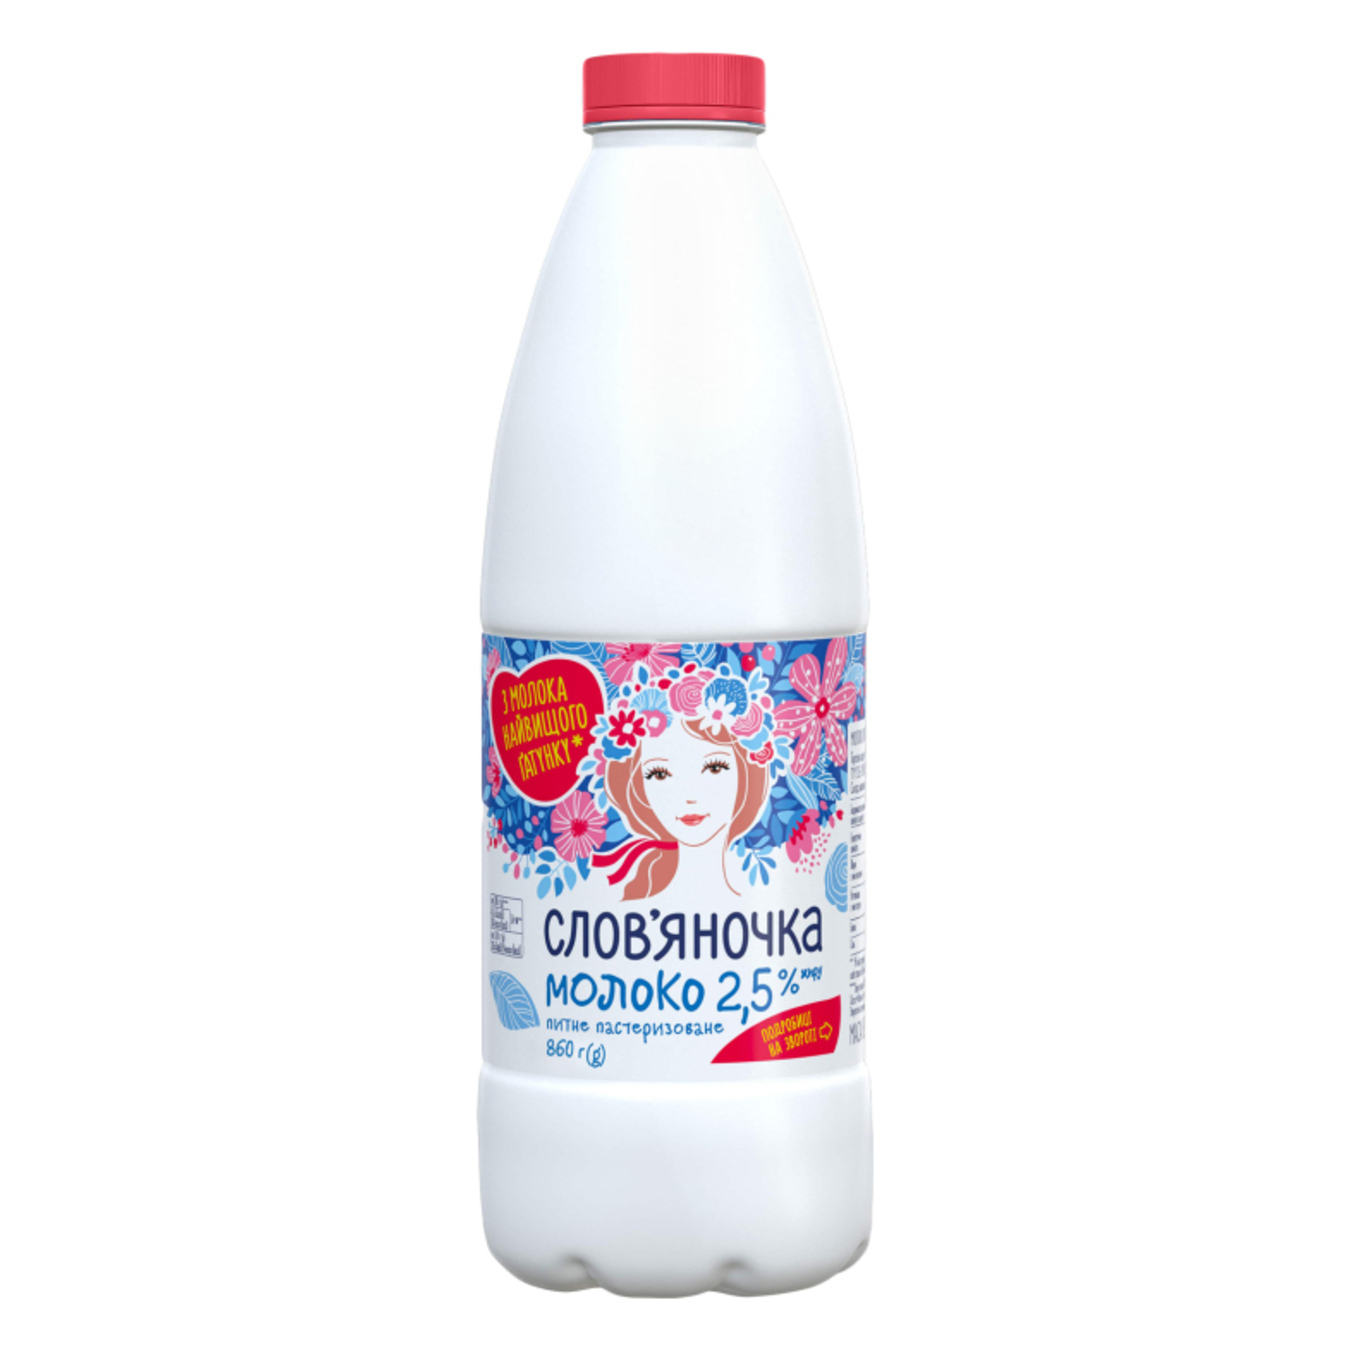 Slovianochka milk 2.5% drinking pasteurized bottle 860g